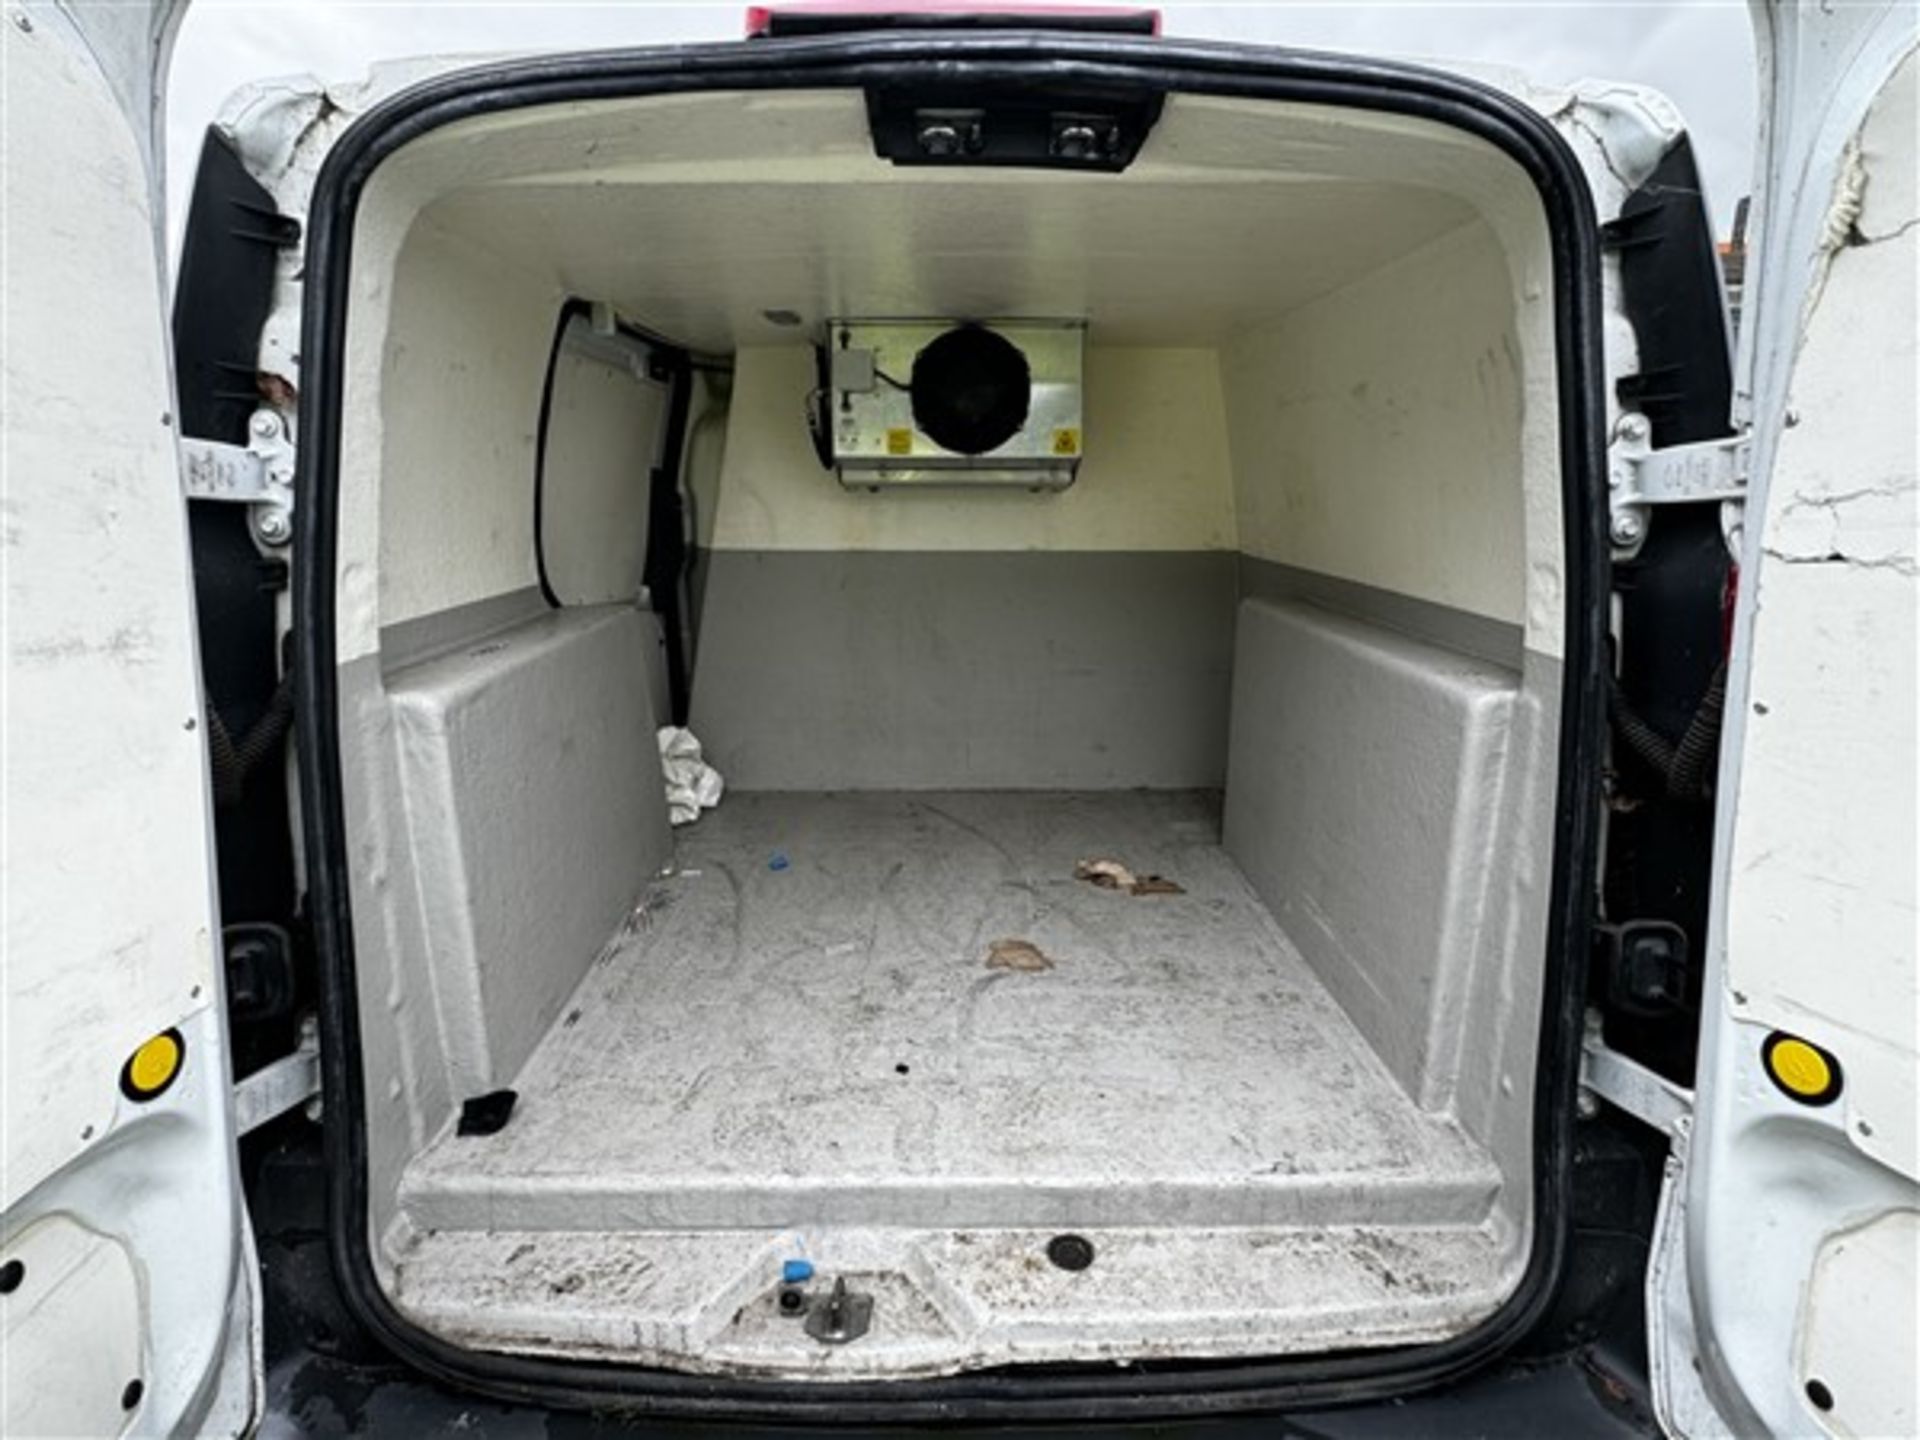 Ford Transit Connect refridgerated panel van, reg no. CK18 HZU mileage 92,243, one key, V5 - yes - Image 13 of 14